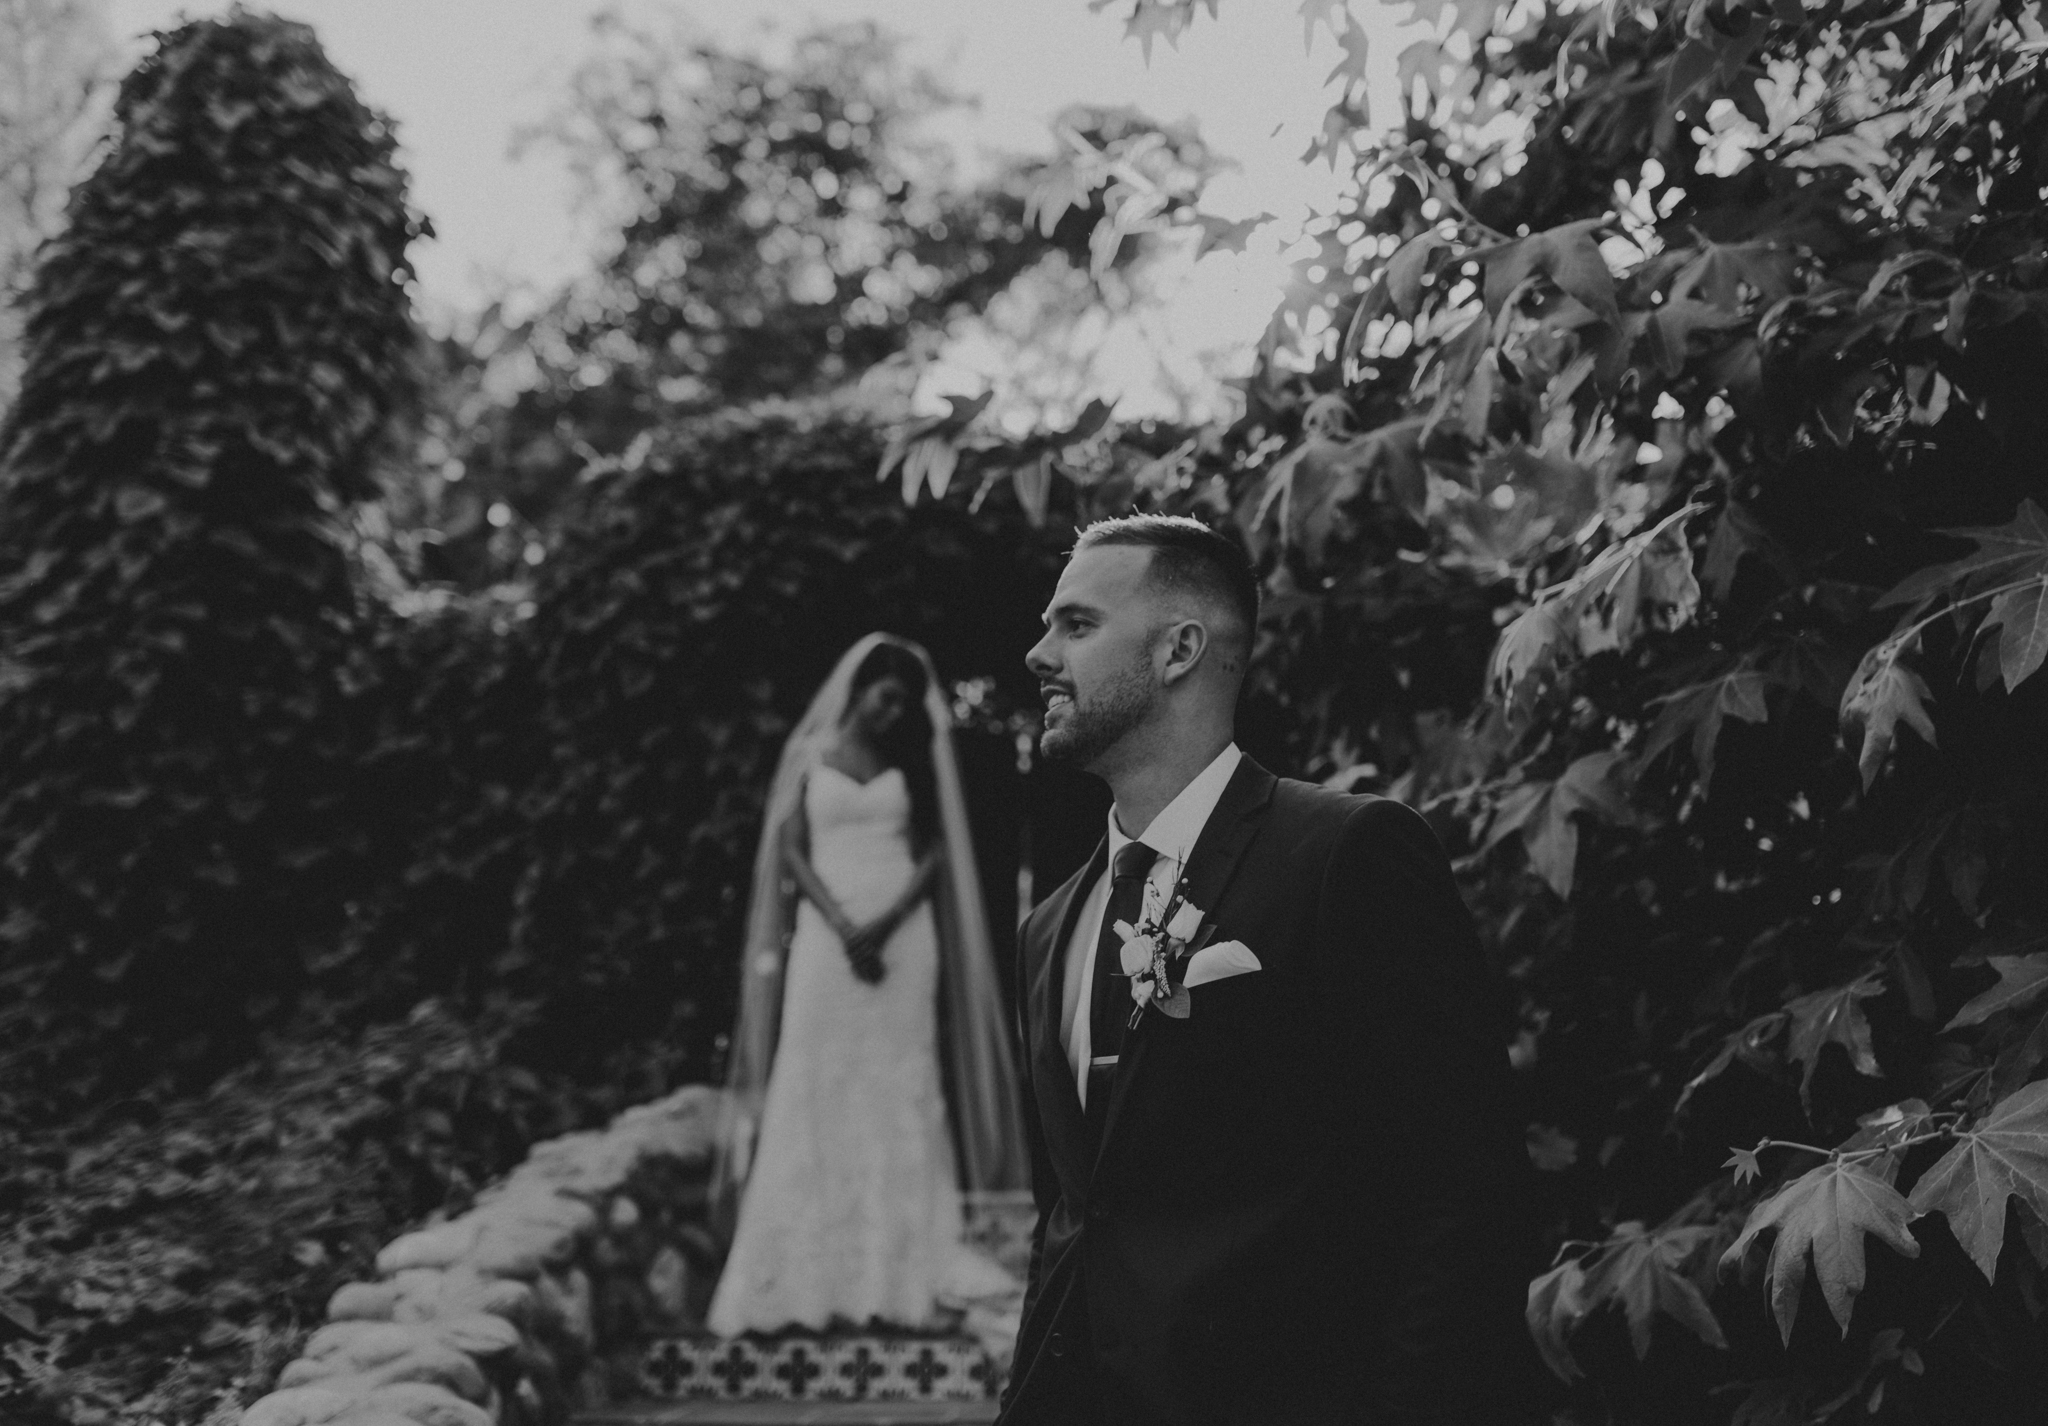 Isaiah + Taylor Photography - Rancho Las Lomas Wedding, Los Angeles Wedding Photographer-111.jpg